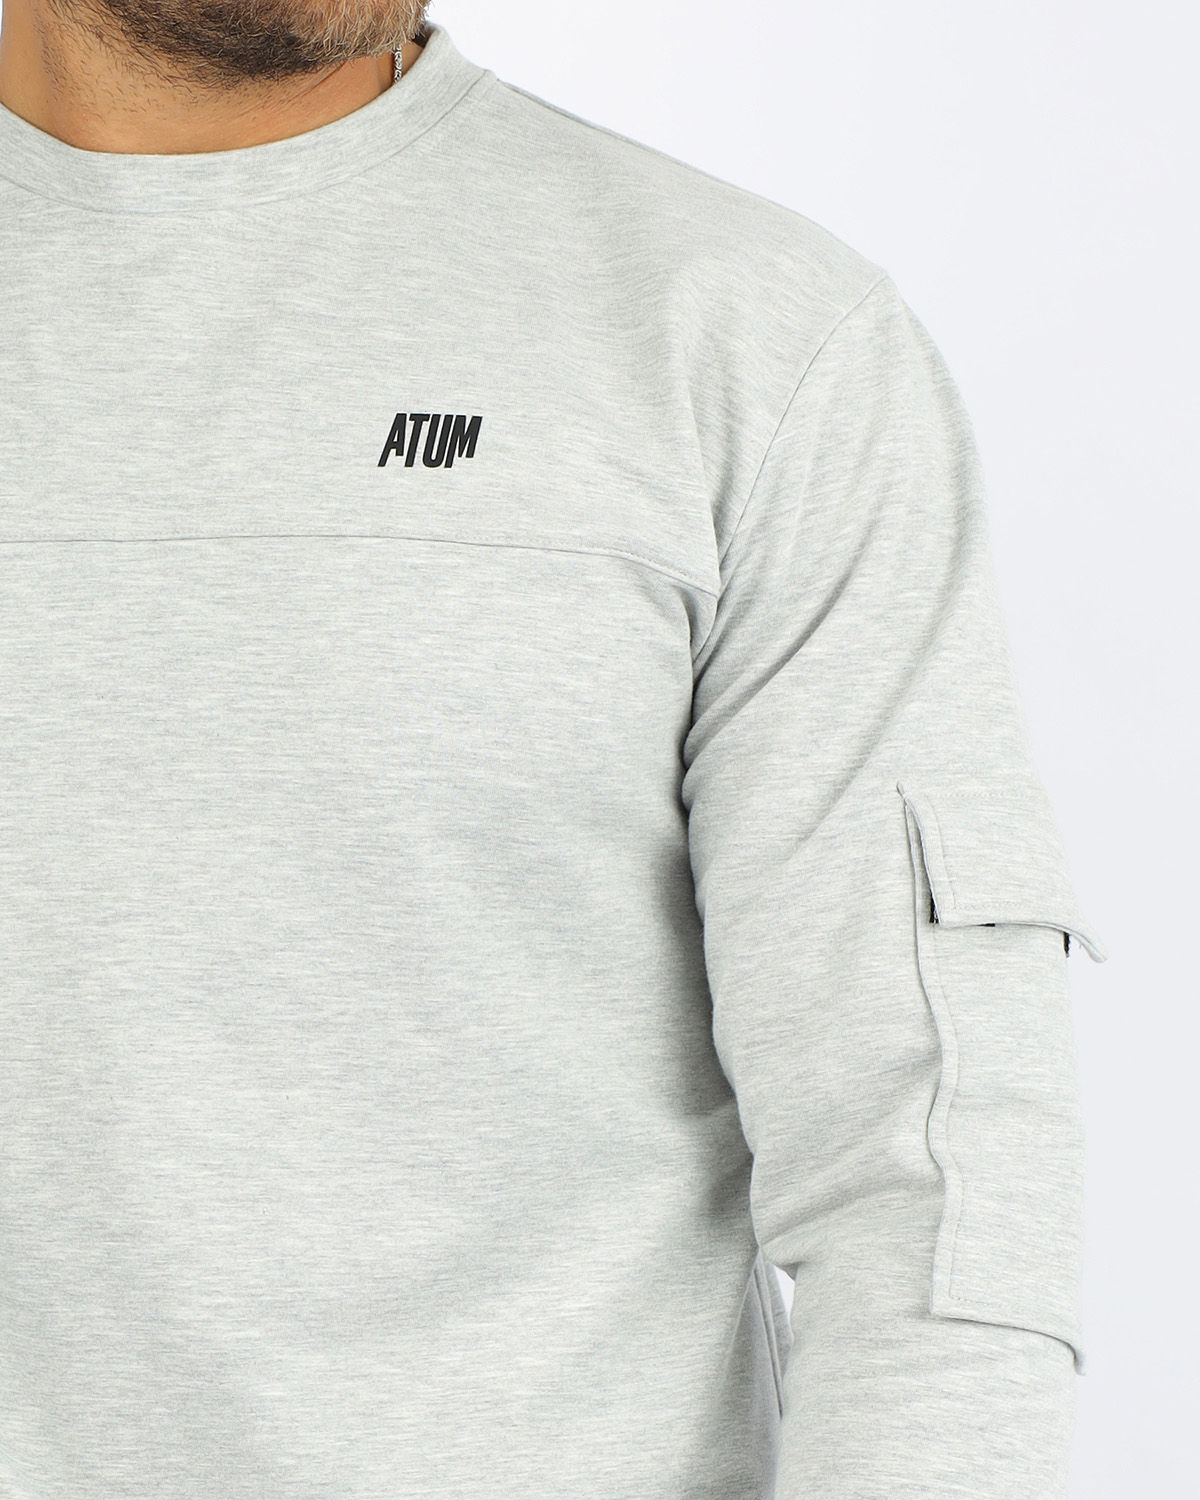 Atum Men's Long-Sleeve T-Shirt - Atum Egypt